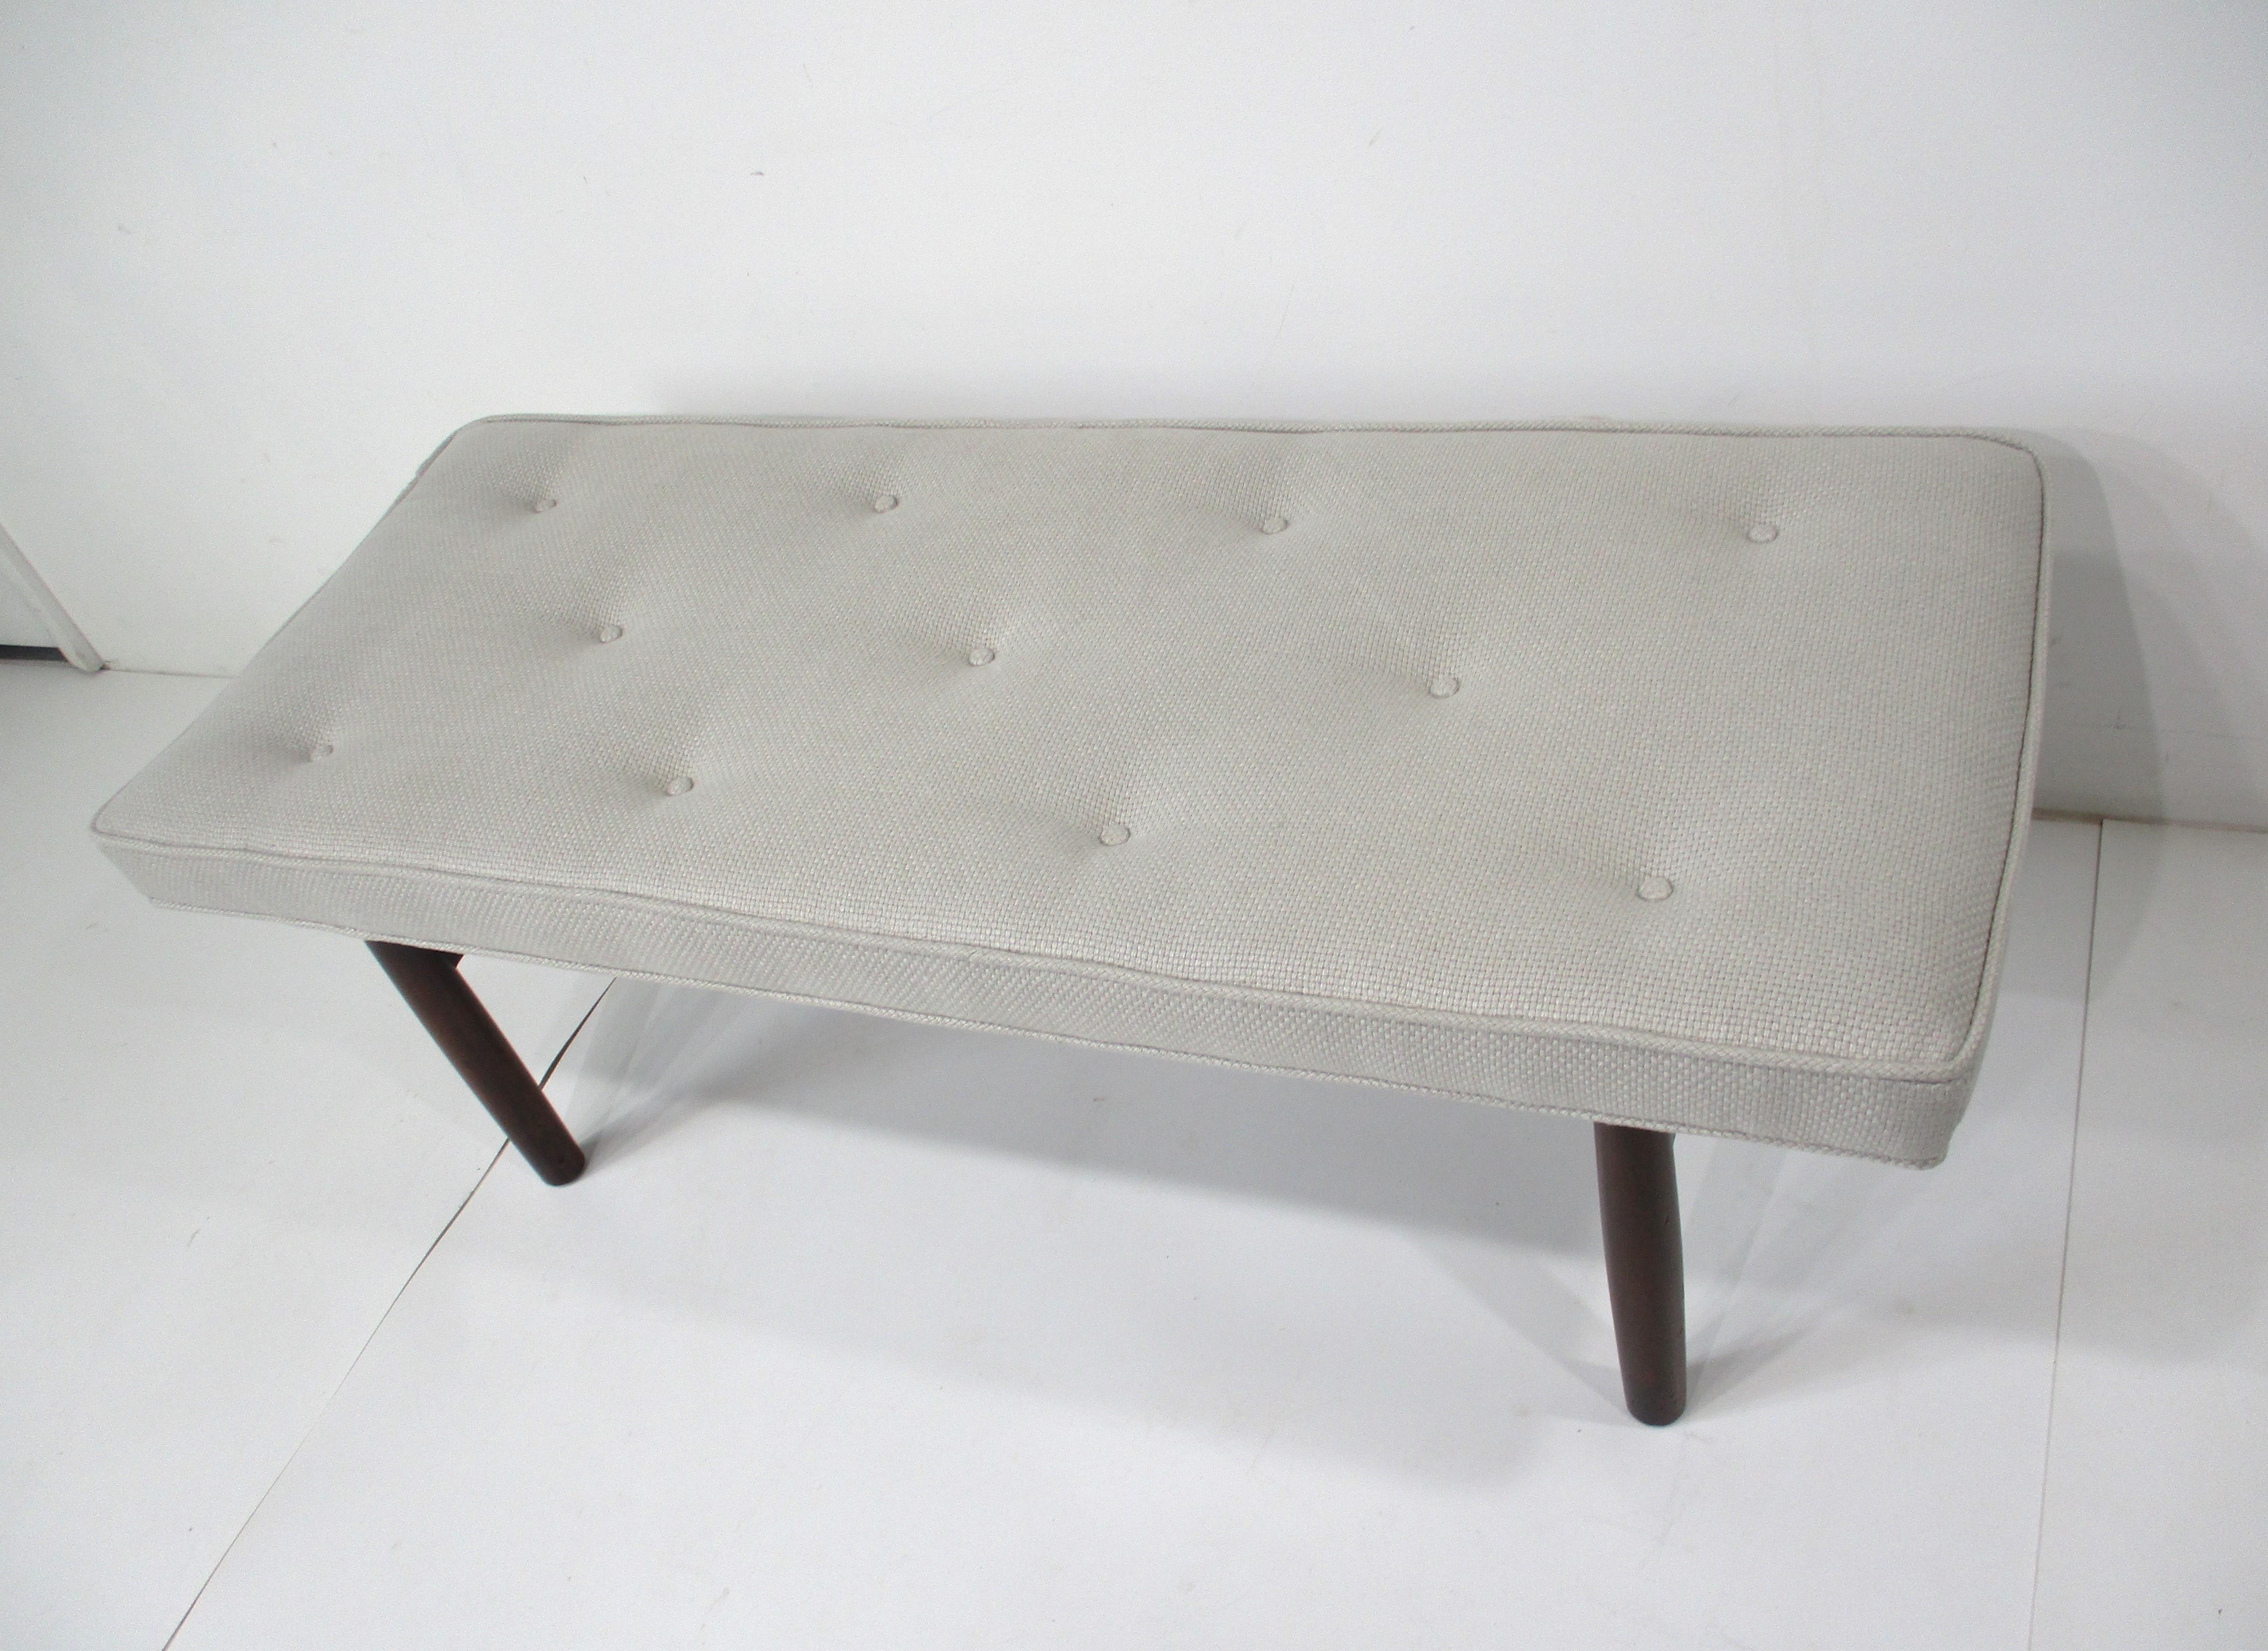 20th Century Upholstered Walnut Bench in the Style of Greta Grossman Danish Modern (B) For Sale